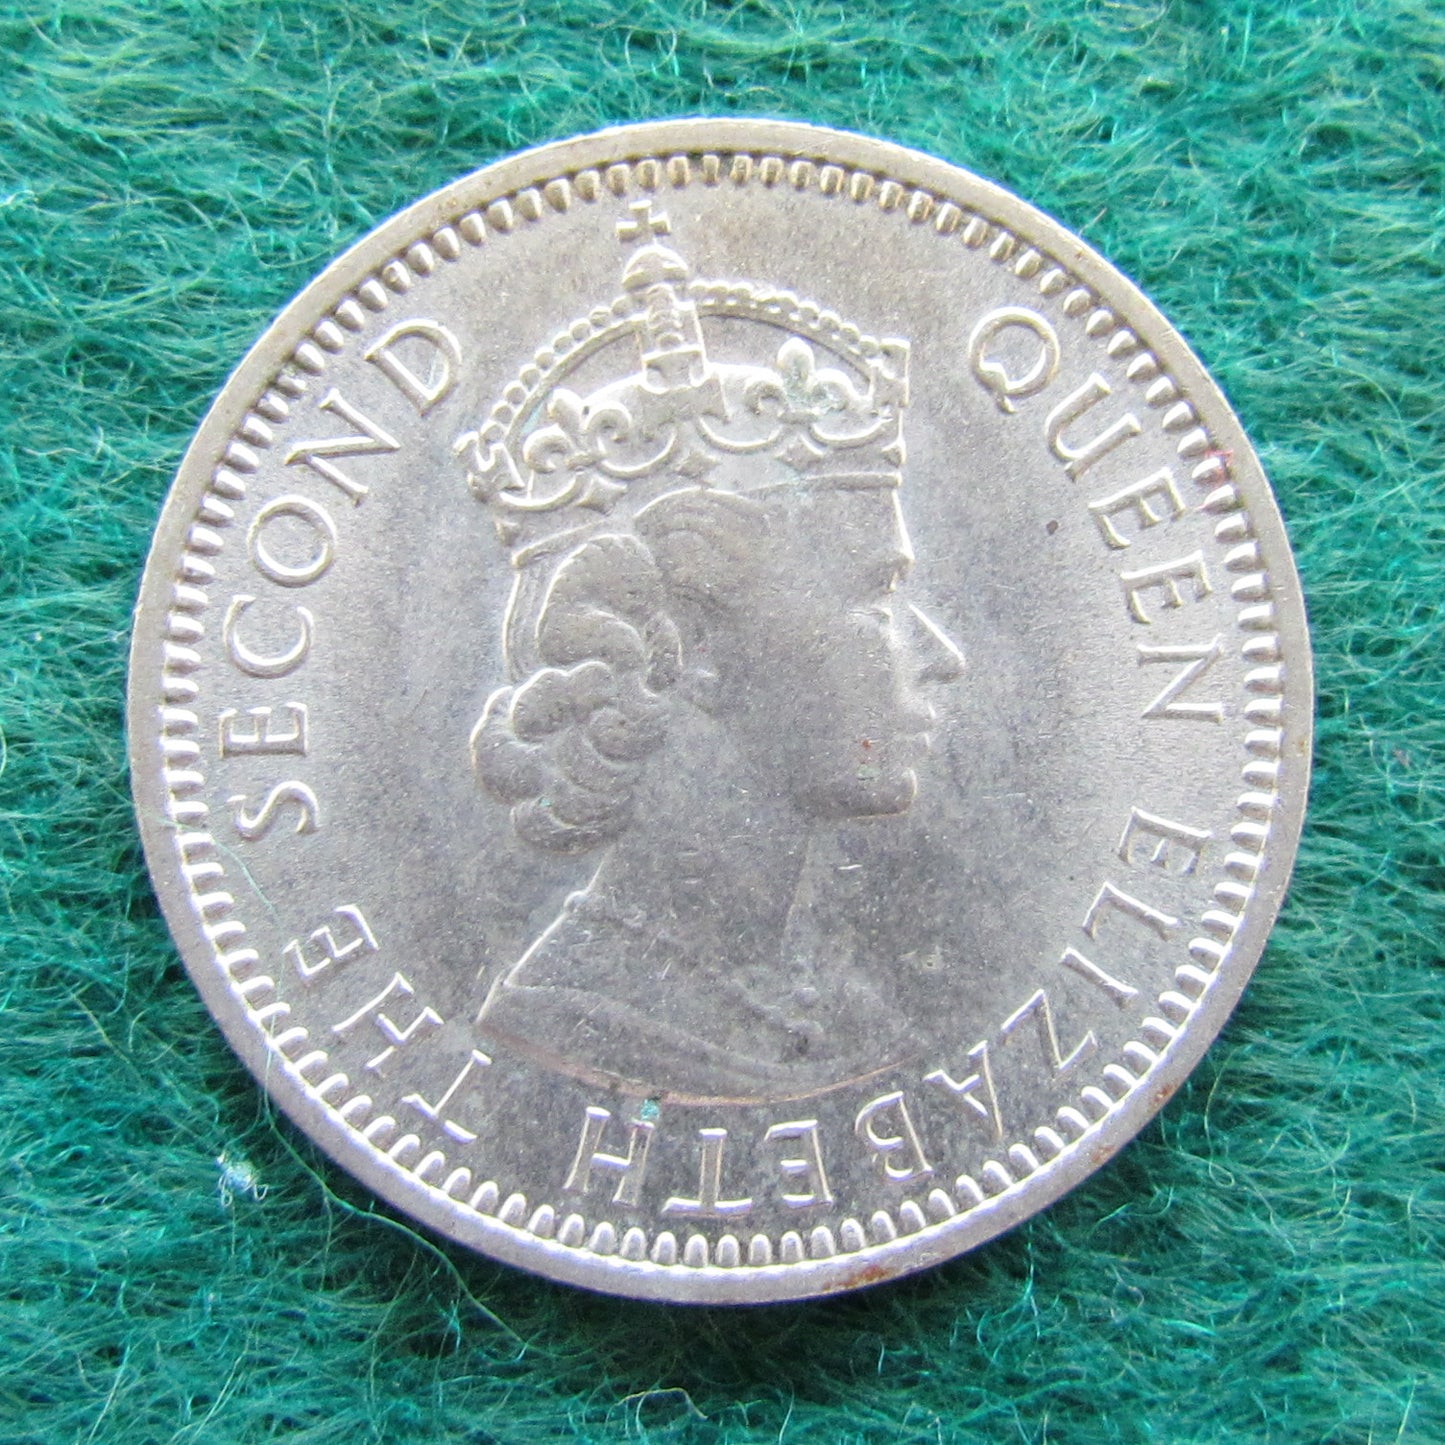 Malaya & British Borneo 1957 Ten Cent Queen Elizabeth II Coin - Circulated